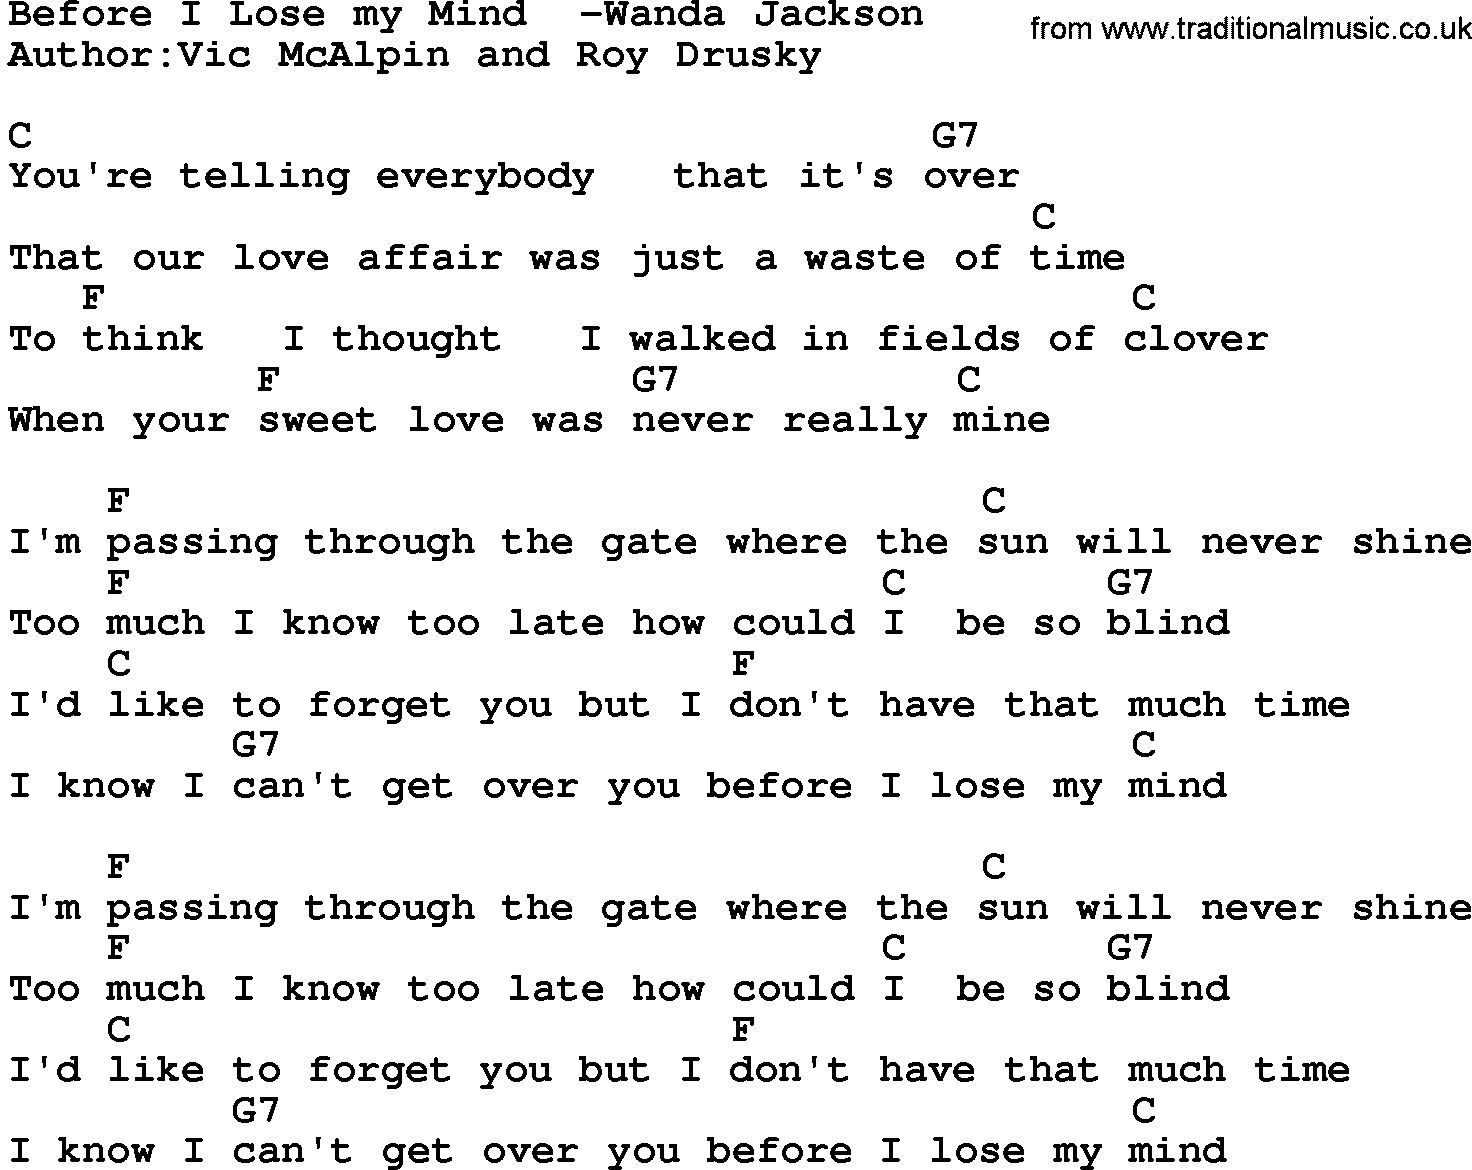 Country music song: Before I Lose My Mind -Wanda Jackson lyrics and chords